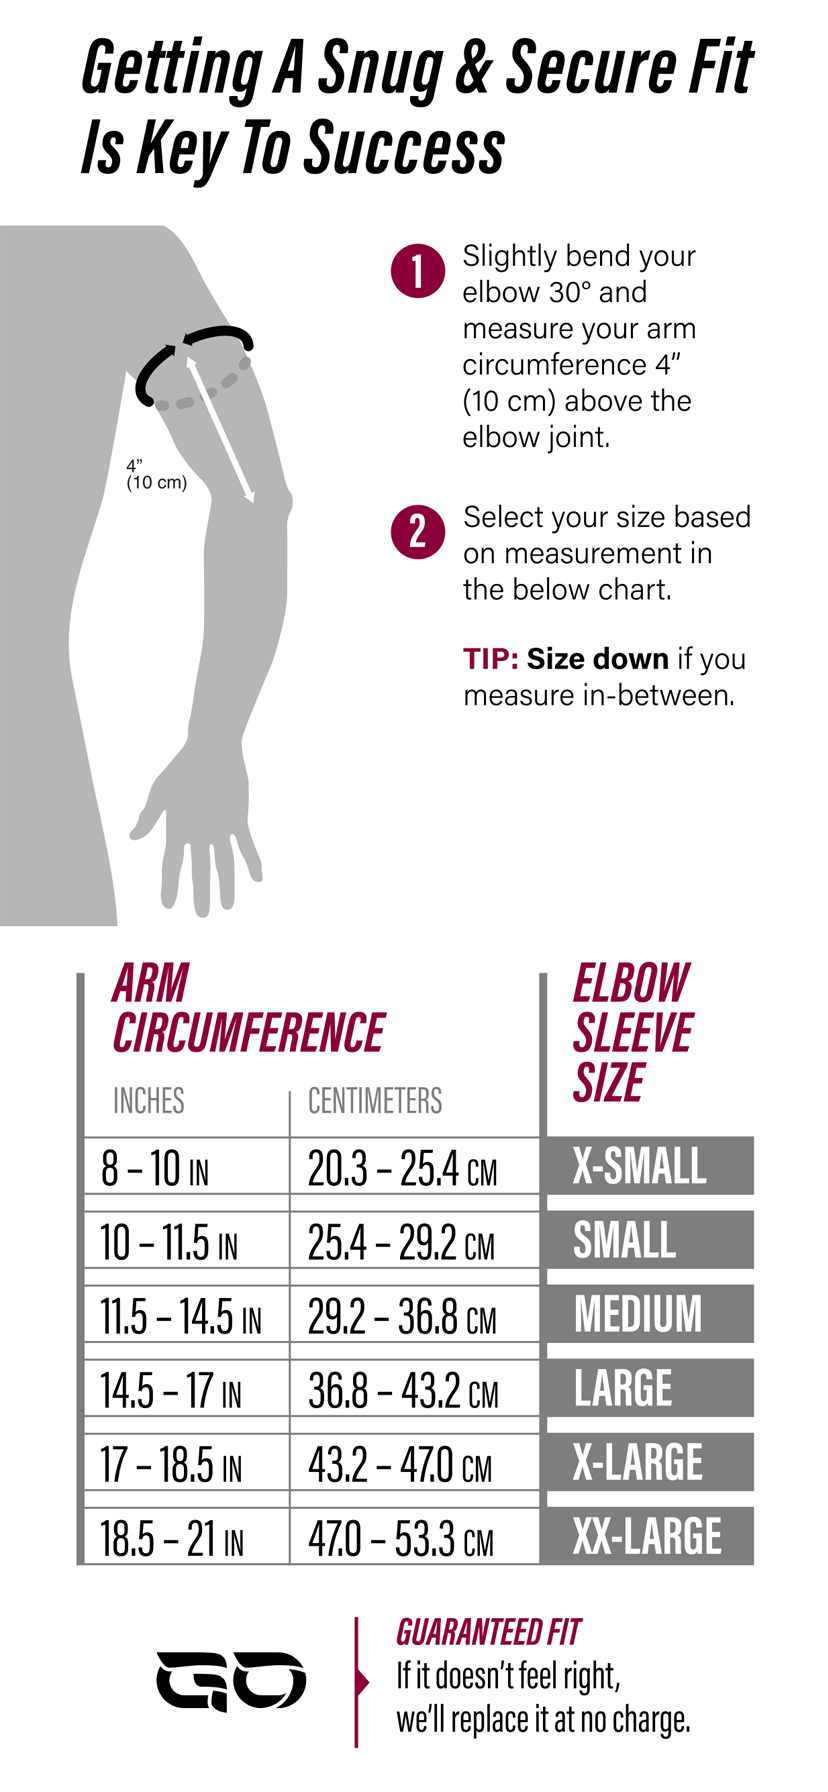 Calf Sleeve Size Chart – GO Sleeves